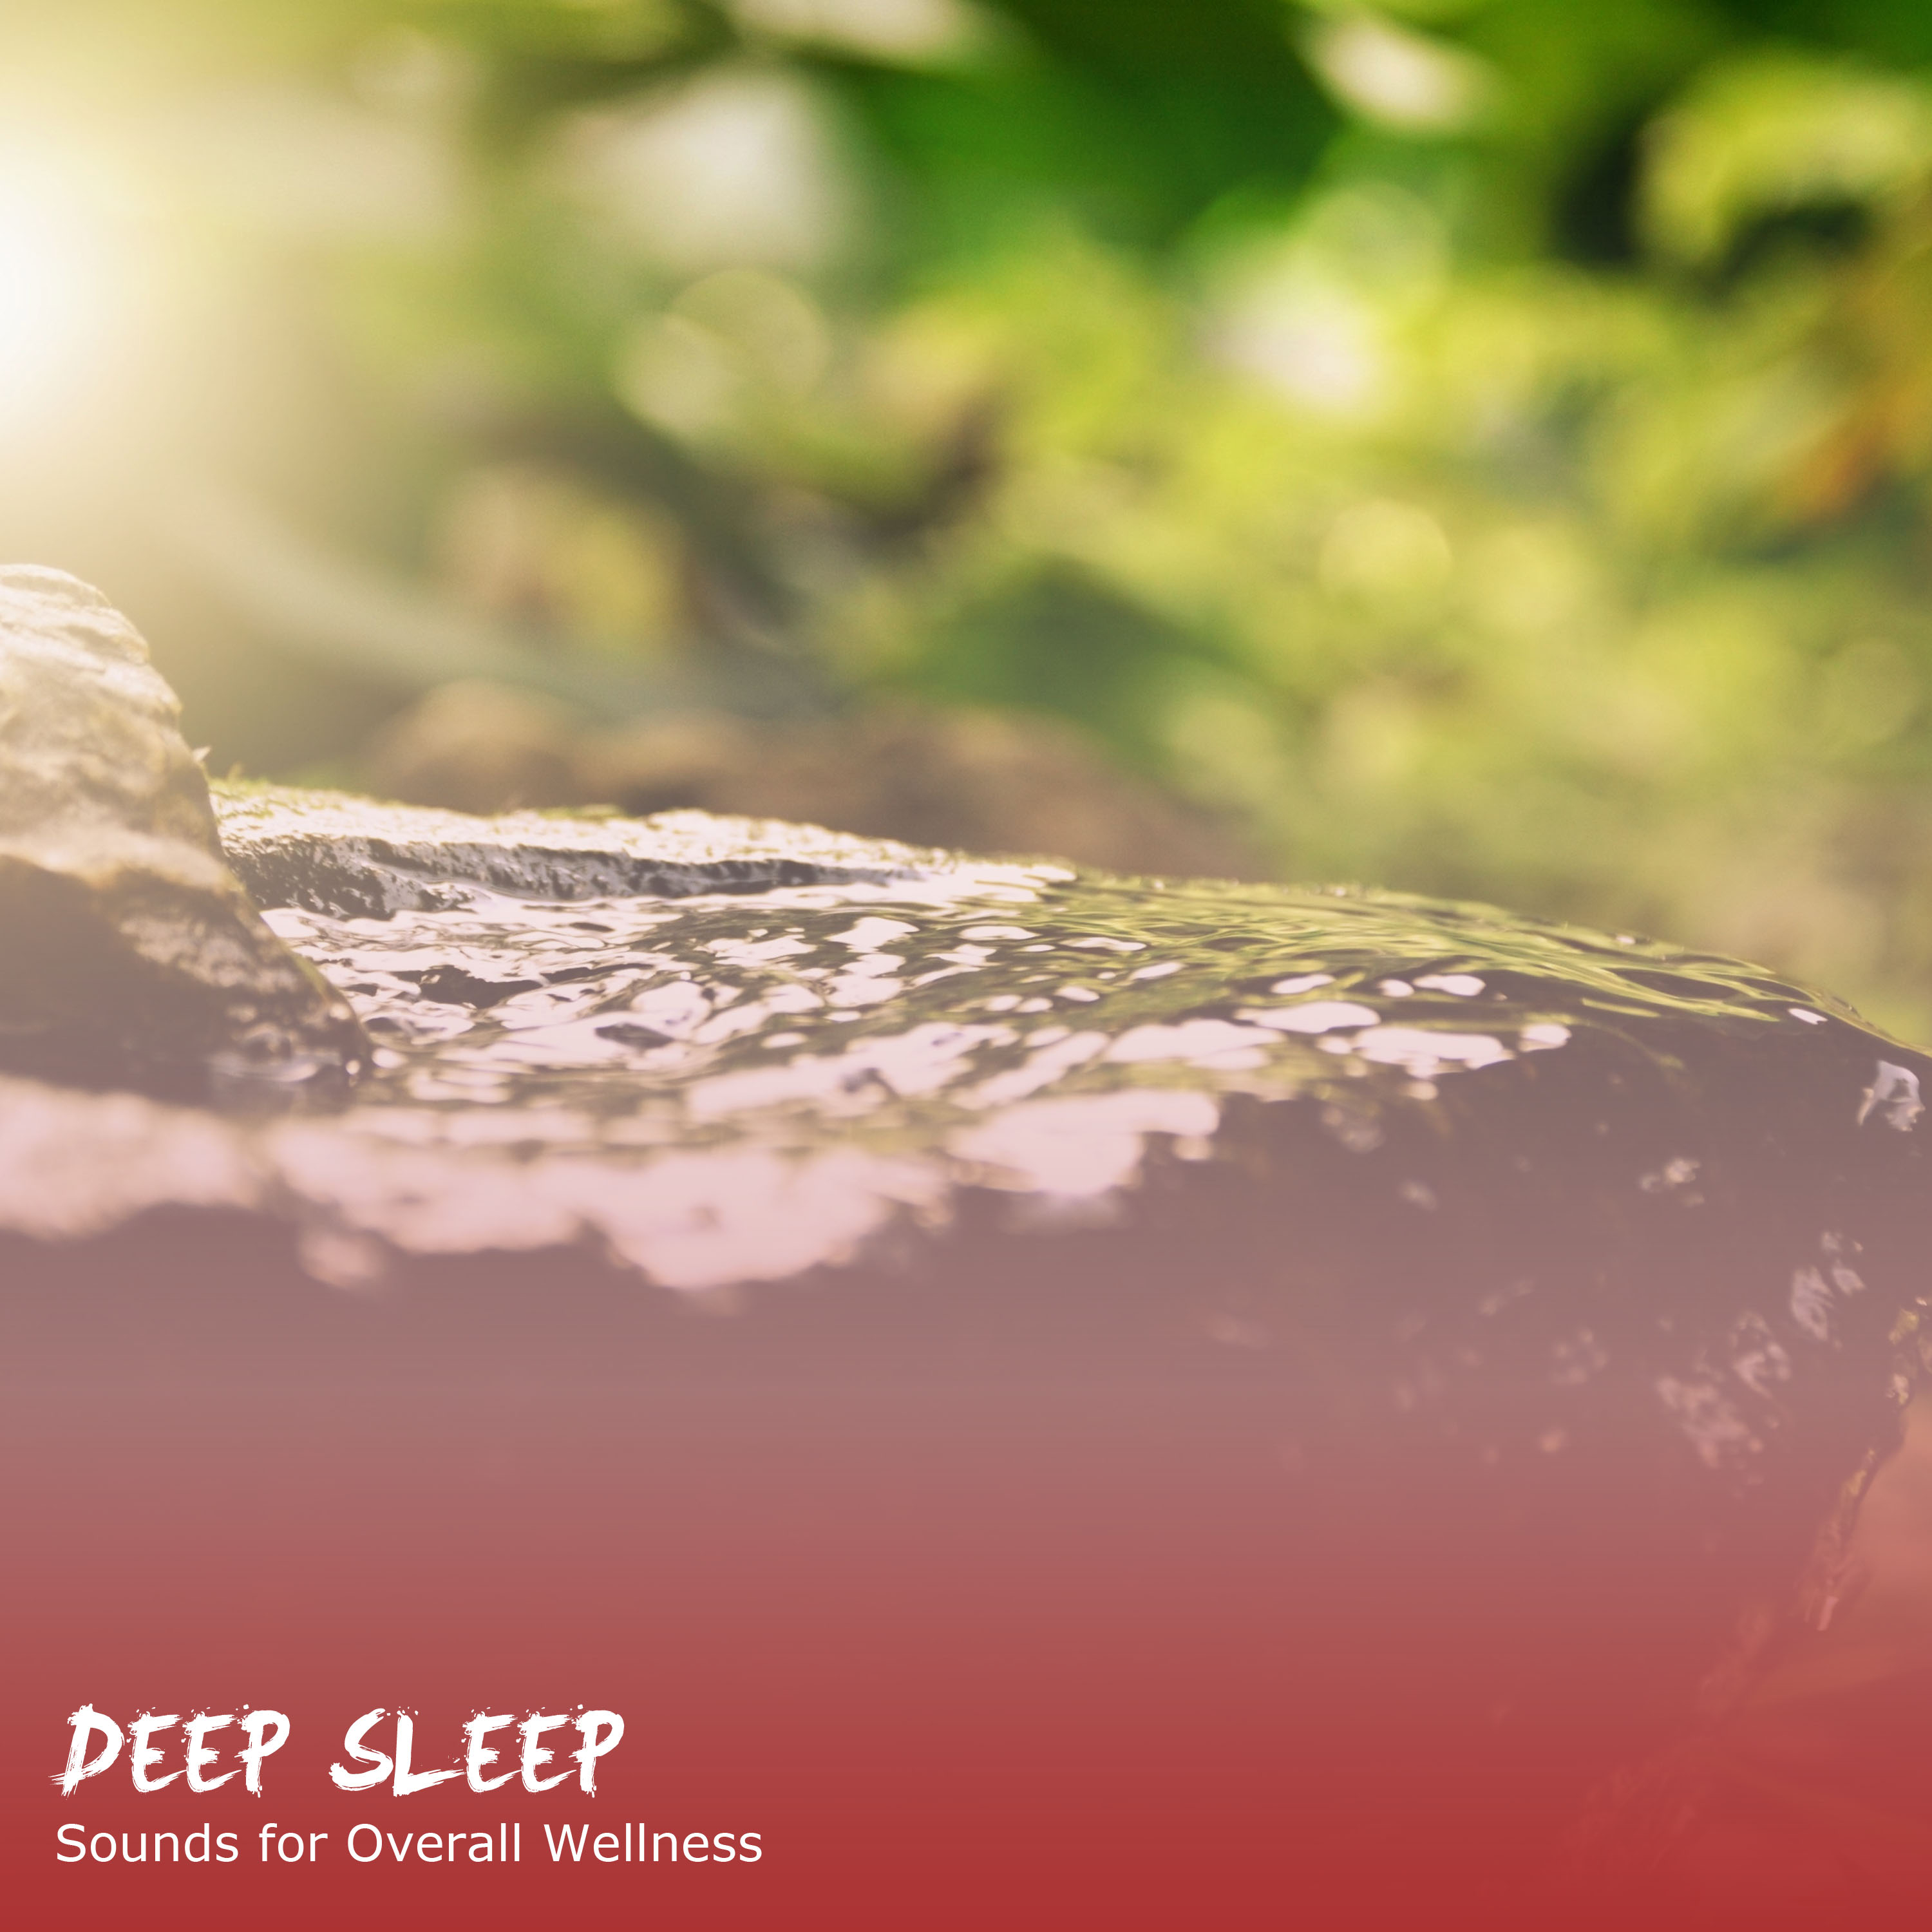 2018 Deep Sleep, Relaxation and Sounds for Overall Wellness